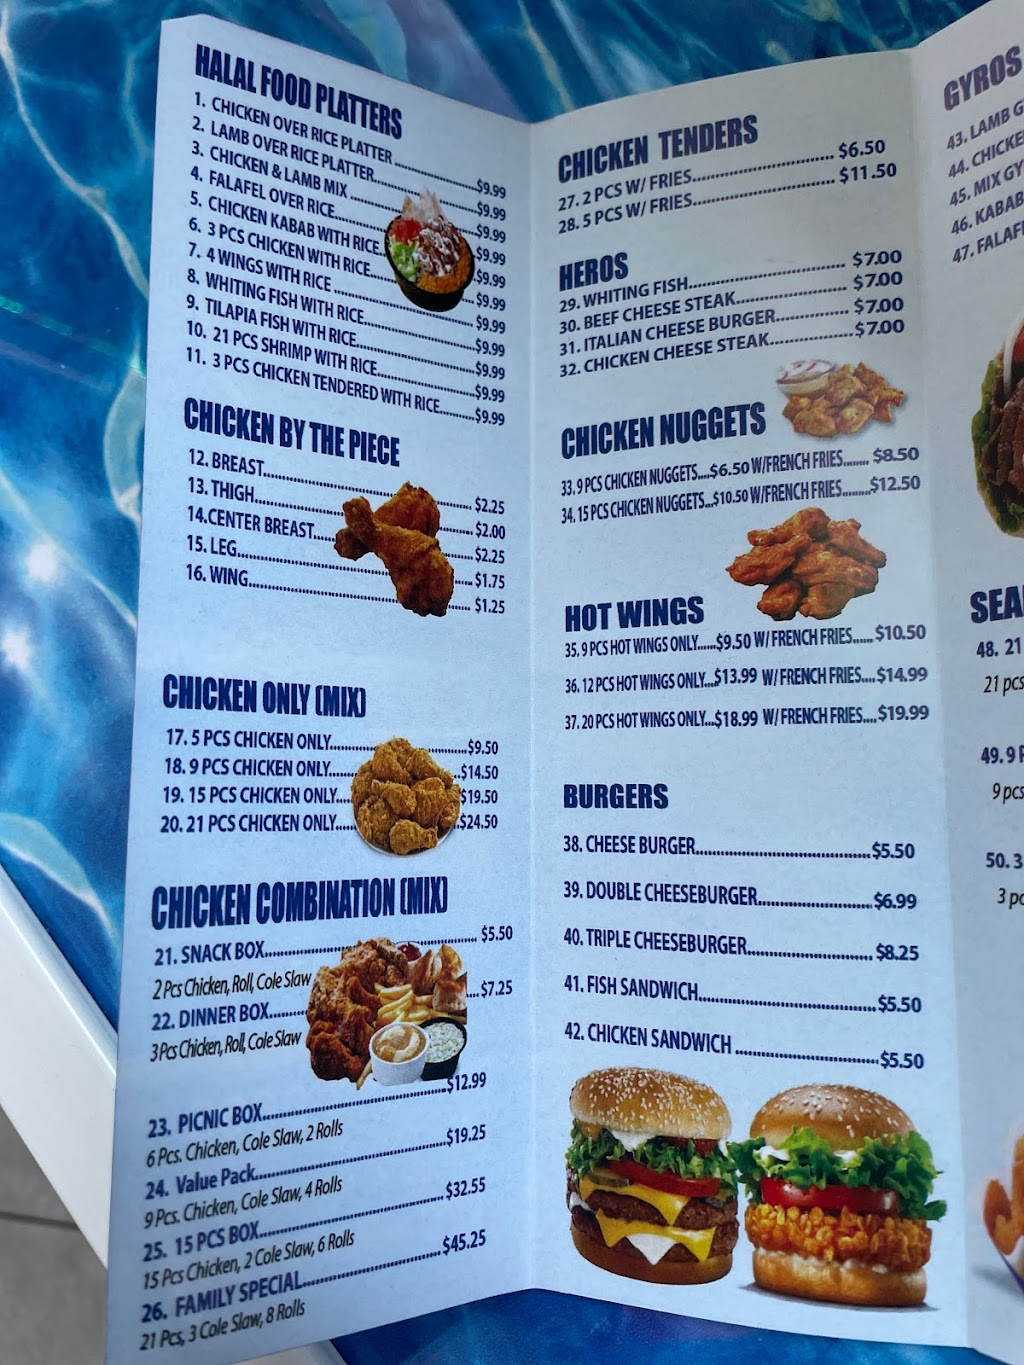 Ashburton Halal Fried Chicken | 168 Ashburton Ave, Yonkers, NY 10701 | Phone: (914) 613-8666